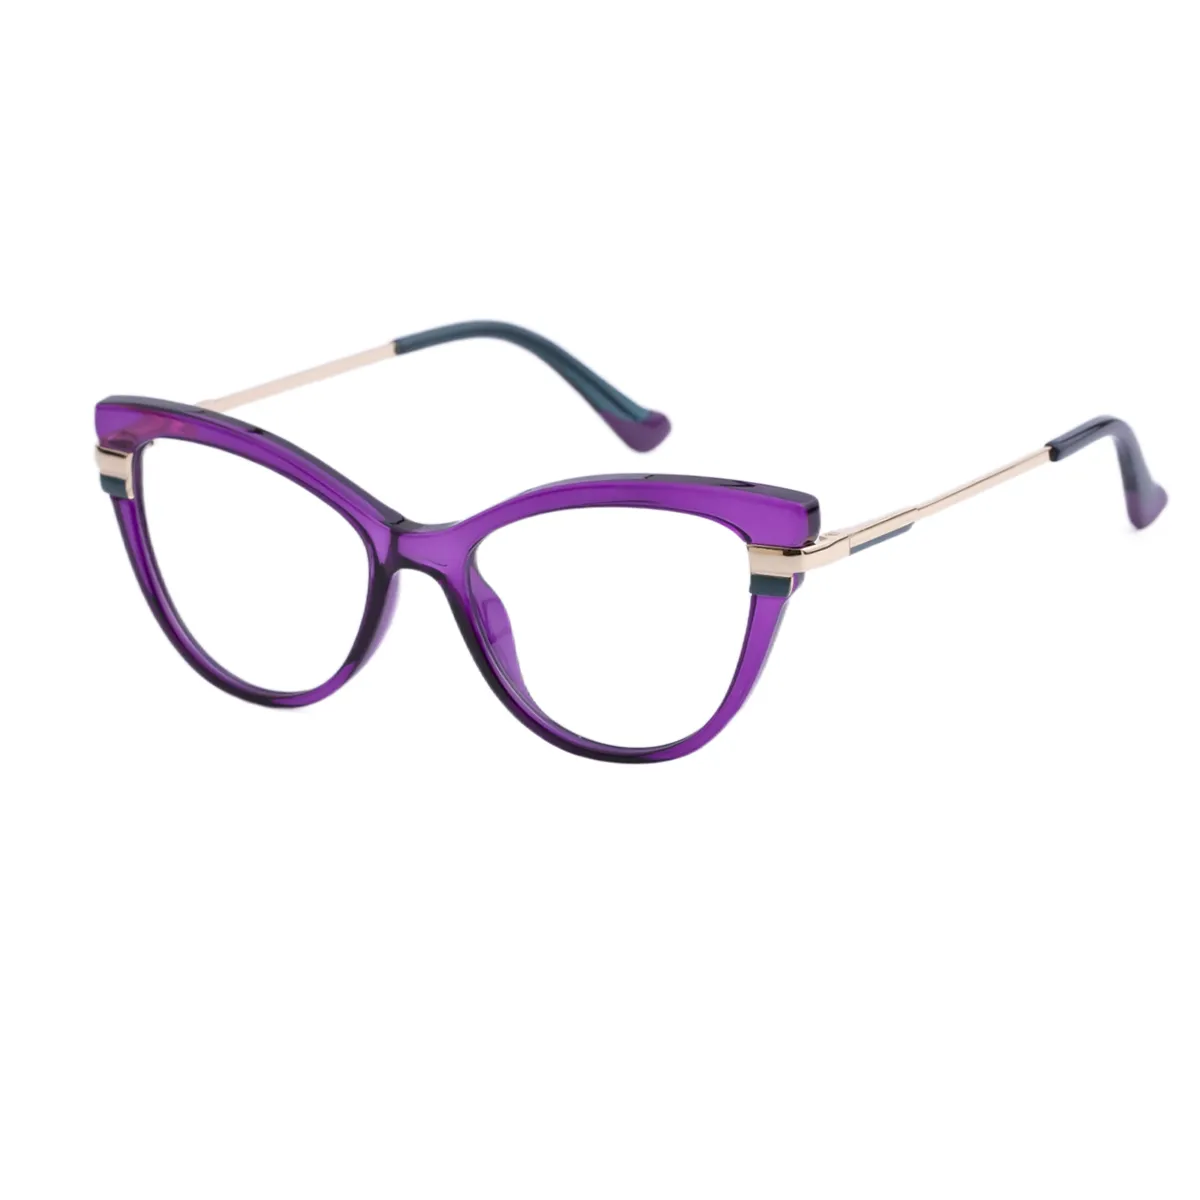 Brook - Cat-eye Purple Glasses for Women - EFE